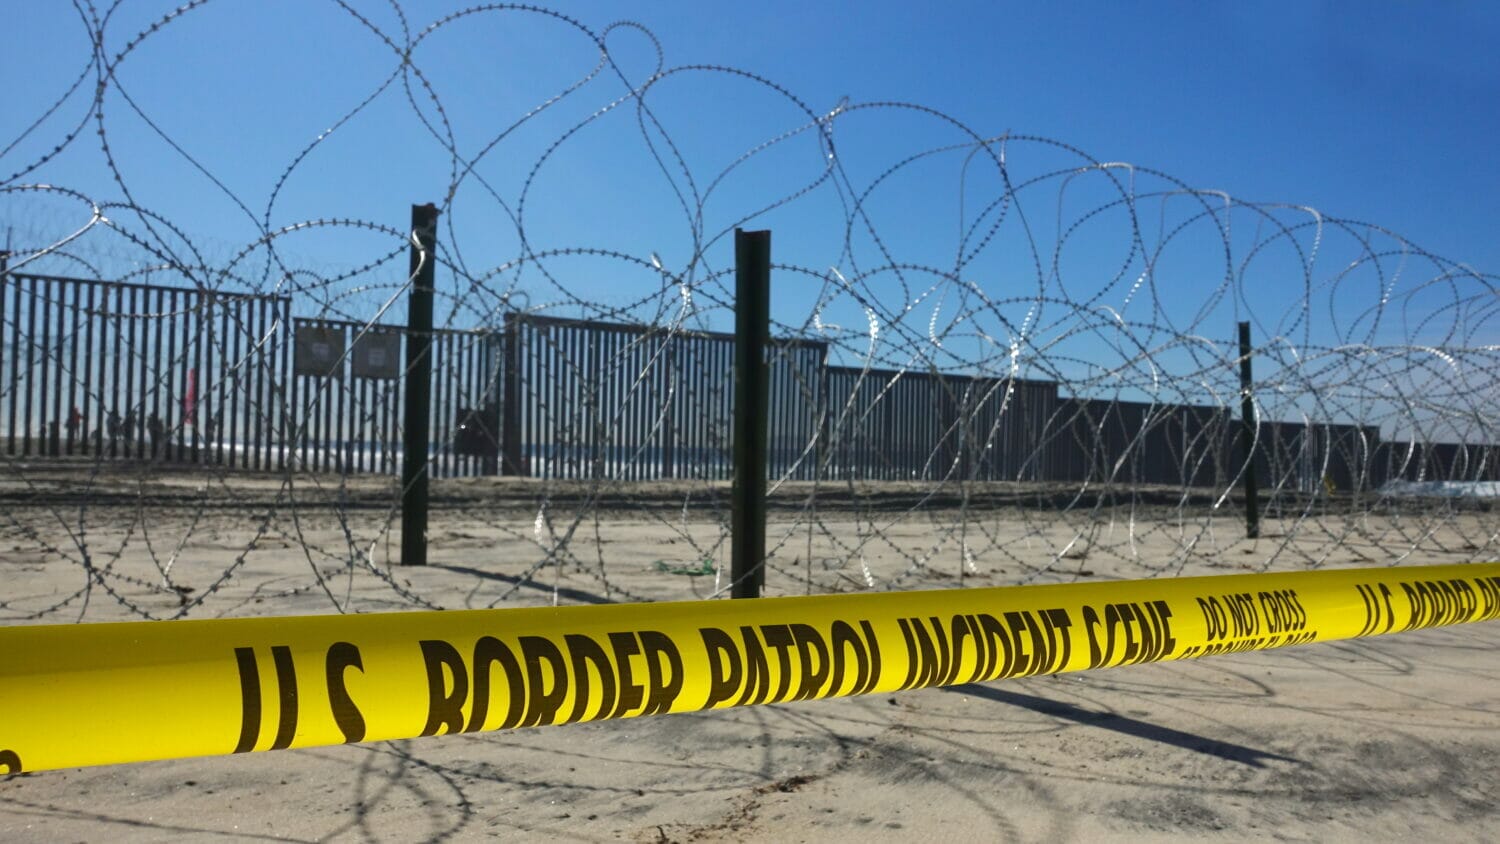 The U.S. Mexico border fence